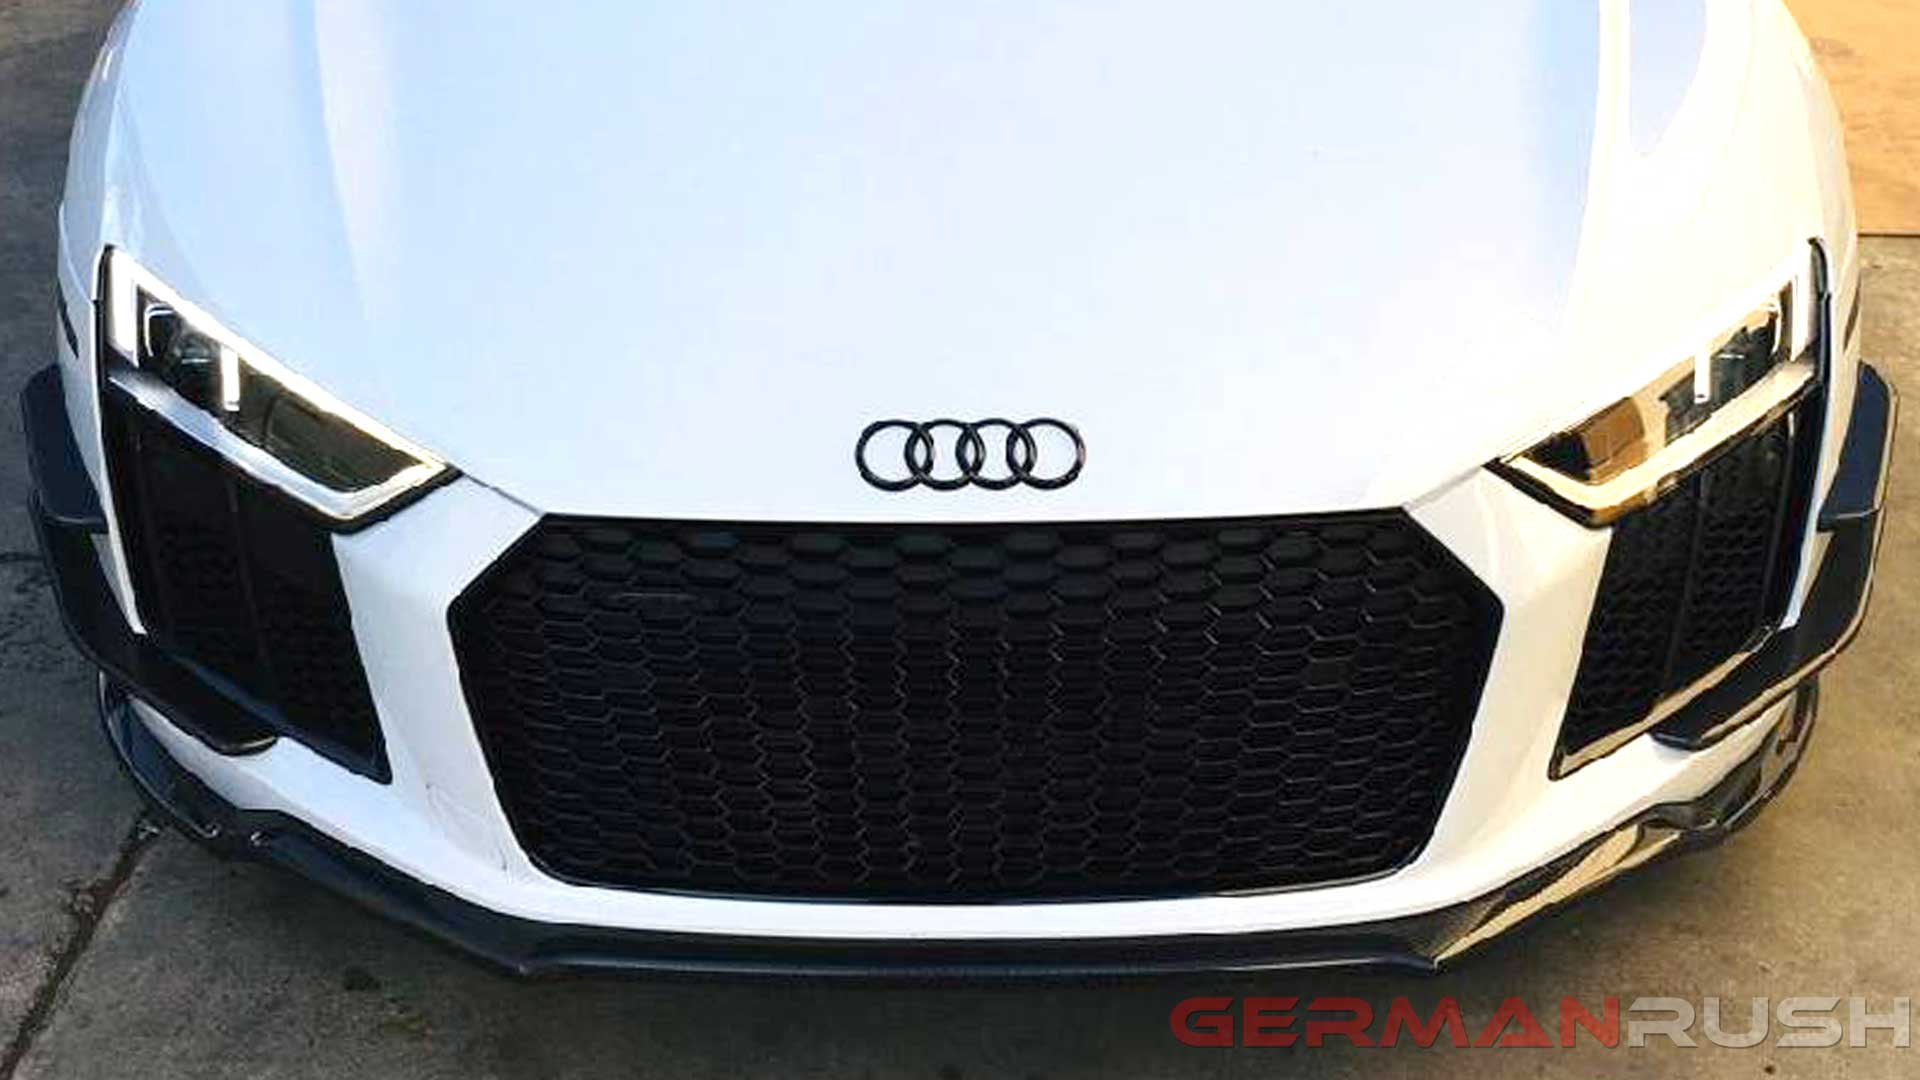 GR front splitter in Carbon Fiber for the Audi R8 4S GR8CFGRFS17 Gen 2, 2nd Gen, aggressive look, aerodynamic, improve stability, down force 